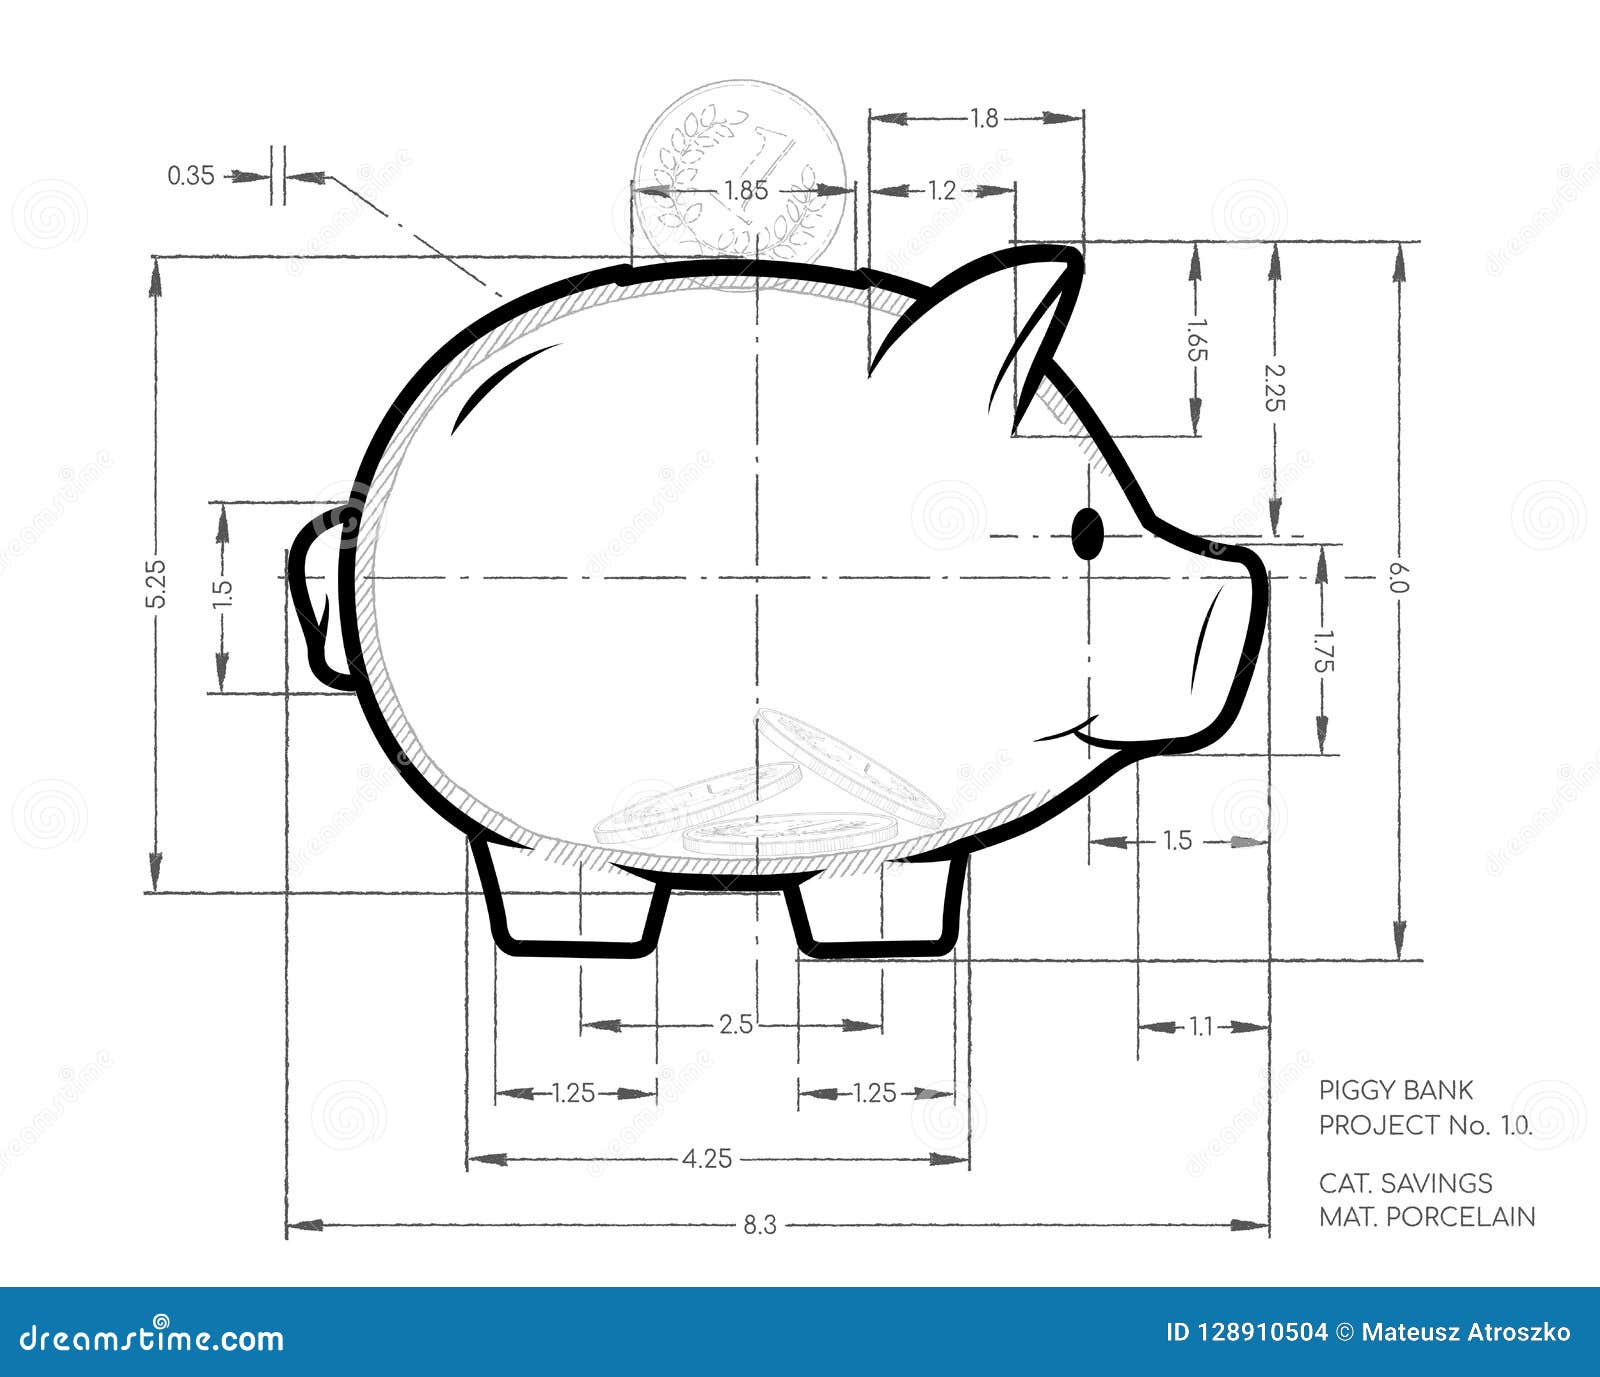 10152 Piggy Bank Drawing Images Stock Photos  Vectors  Shutterstock